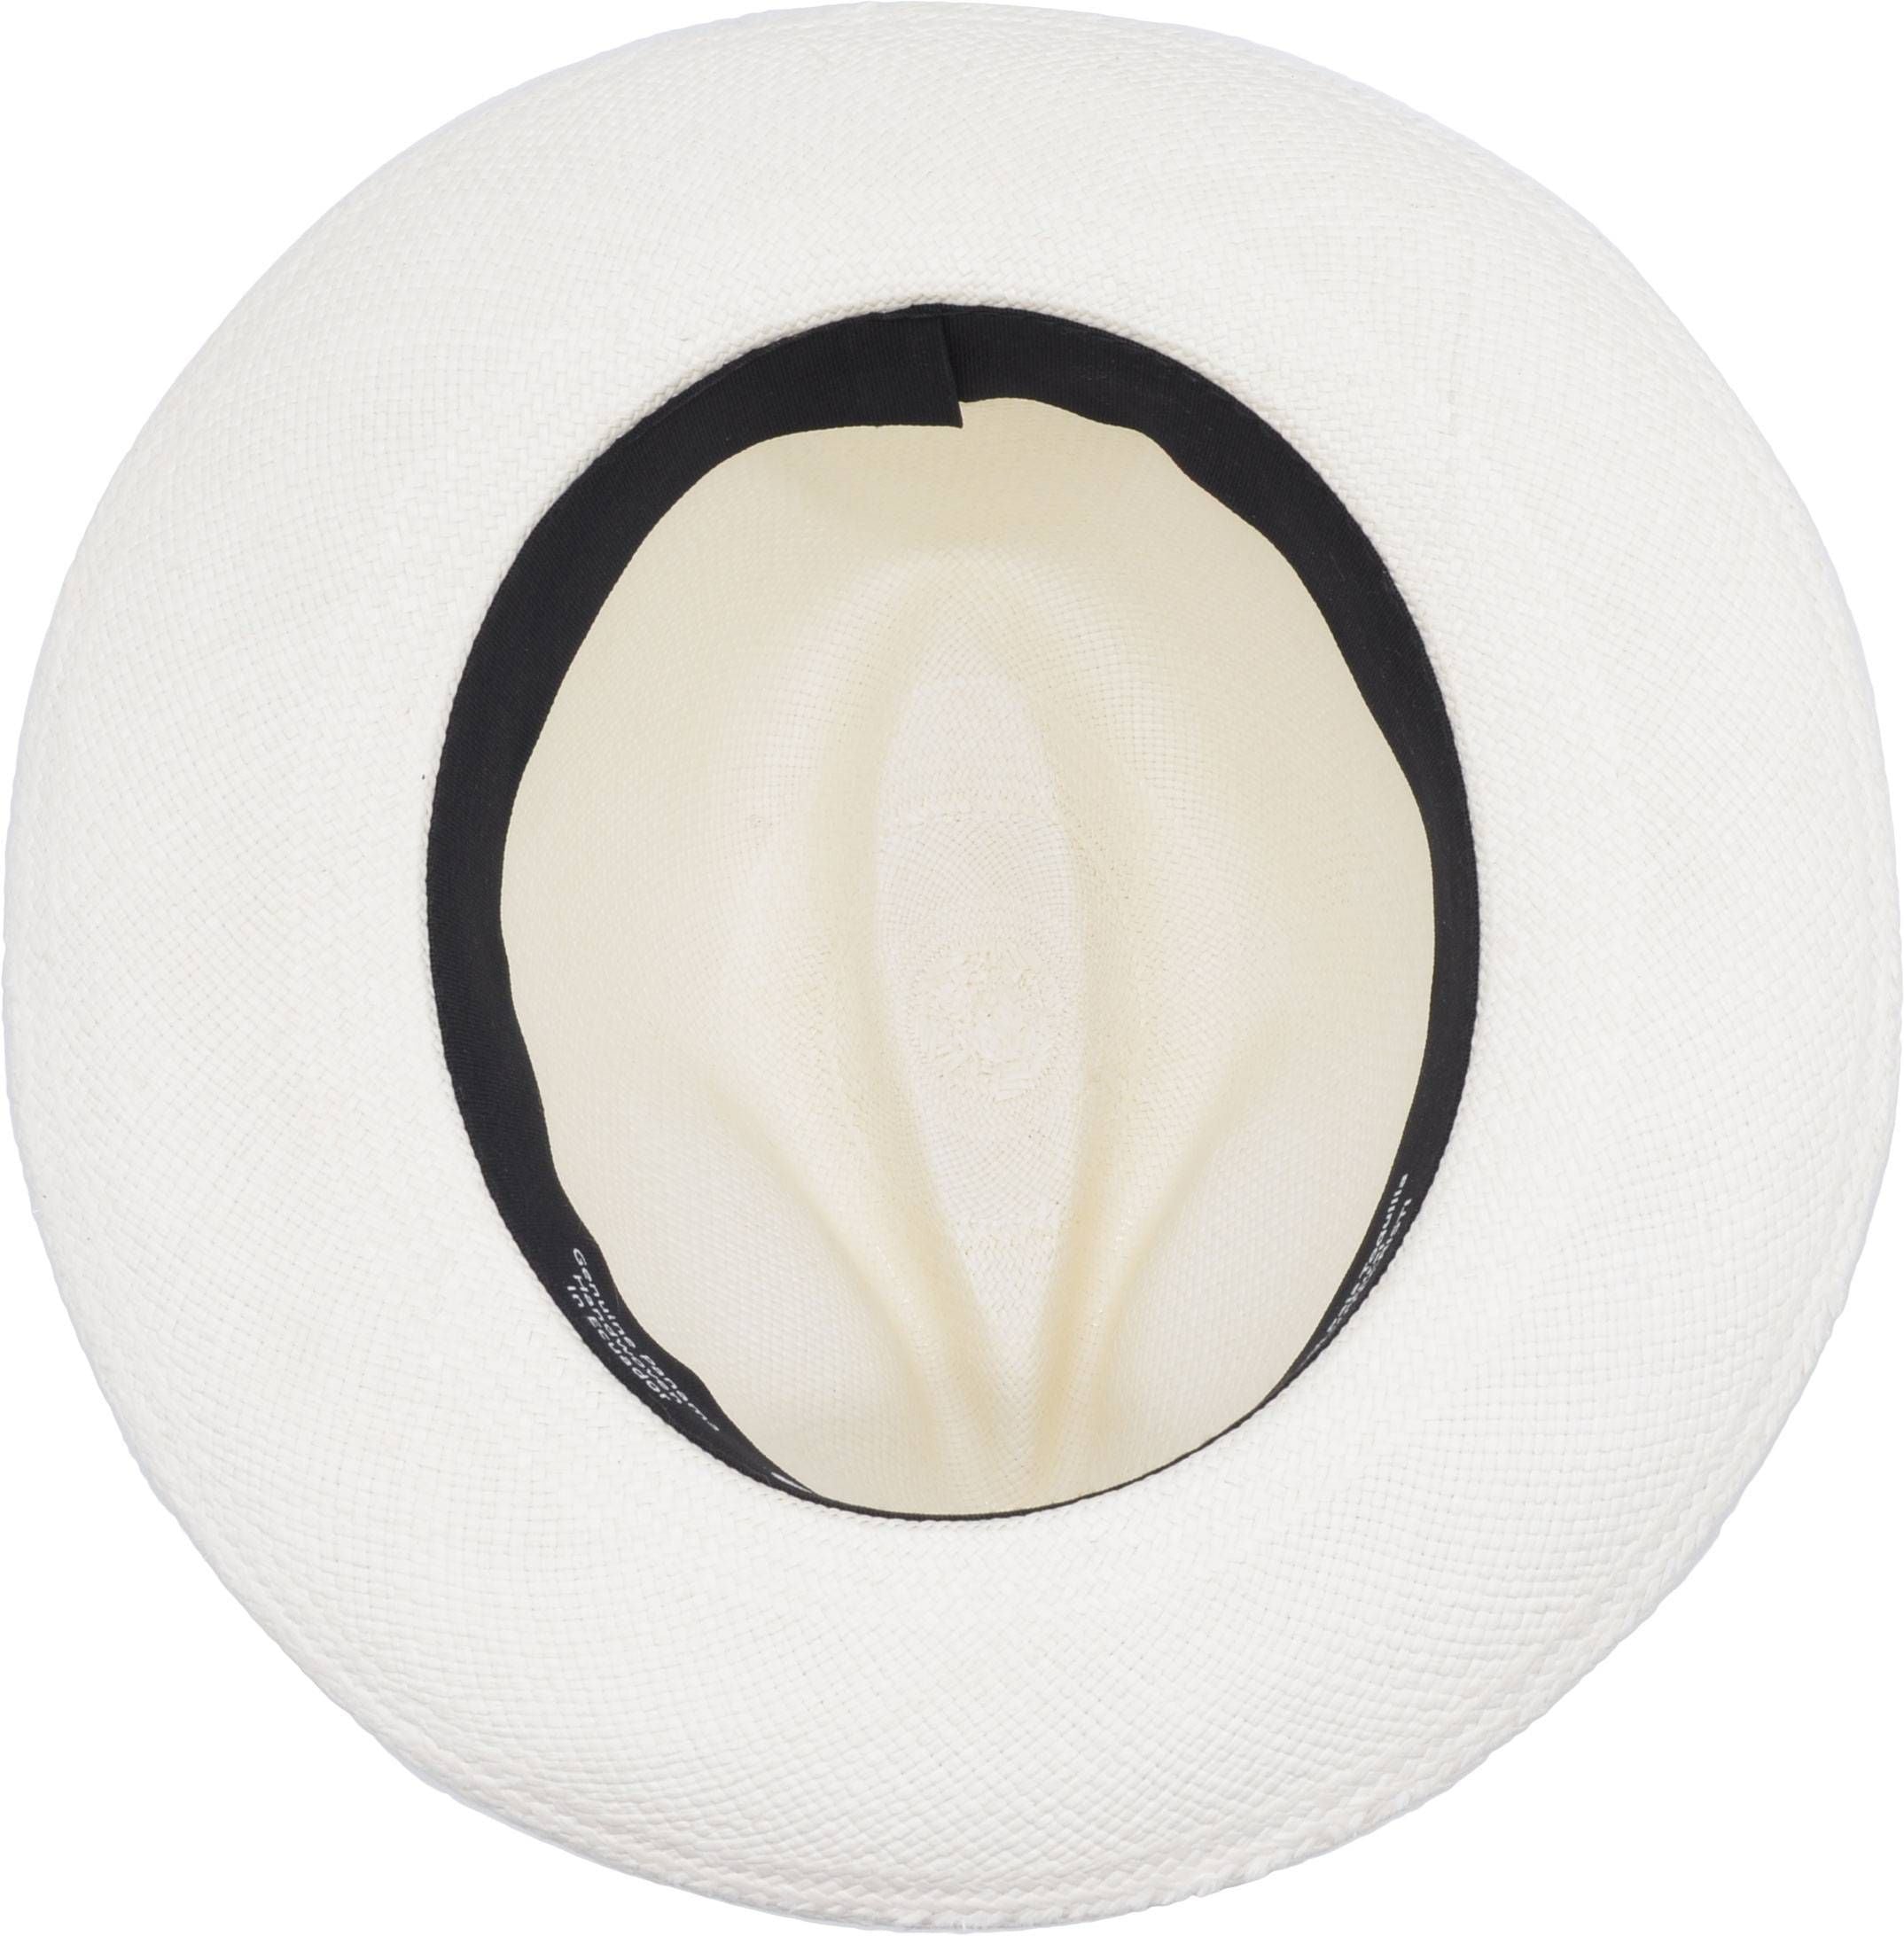 Natural Straw Panama Hat